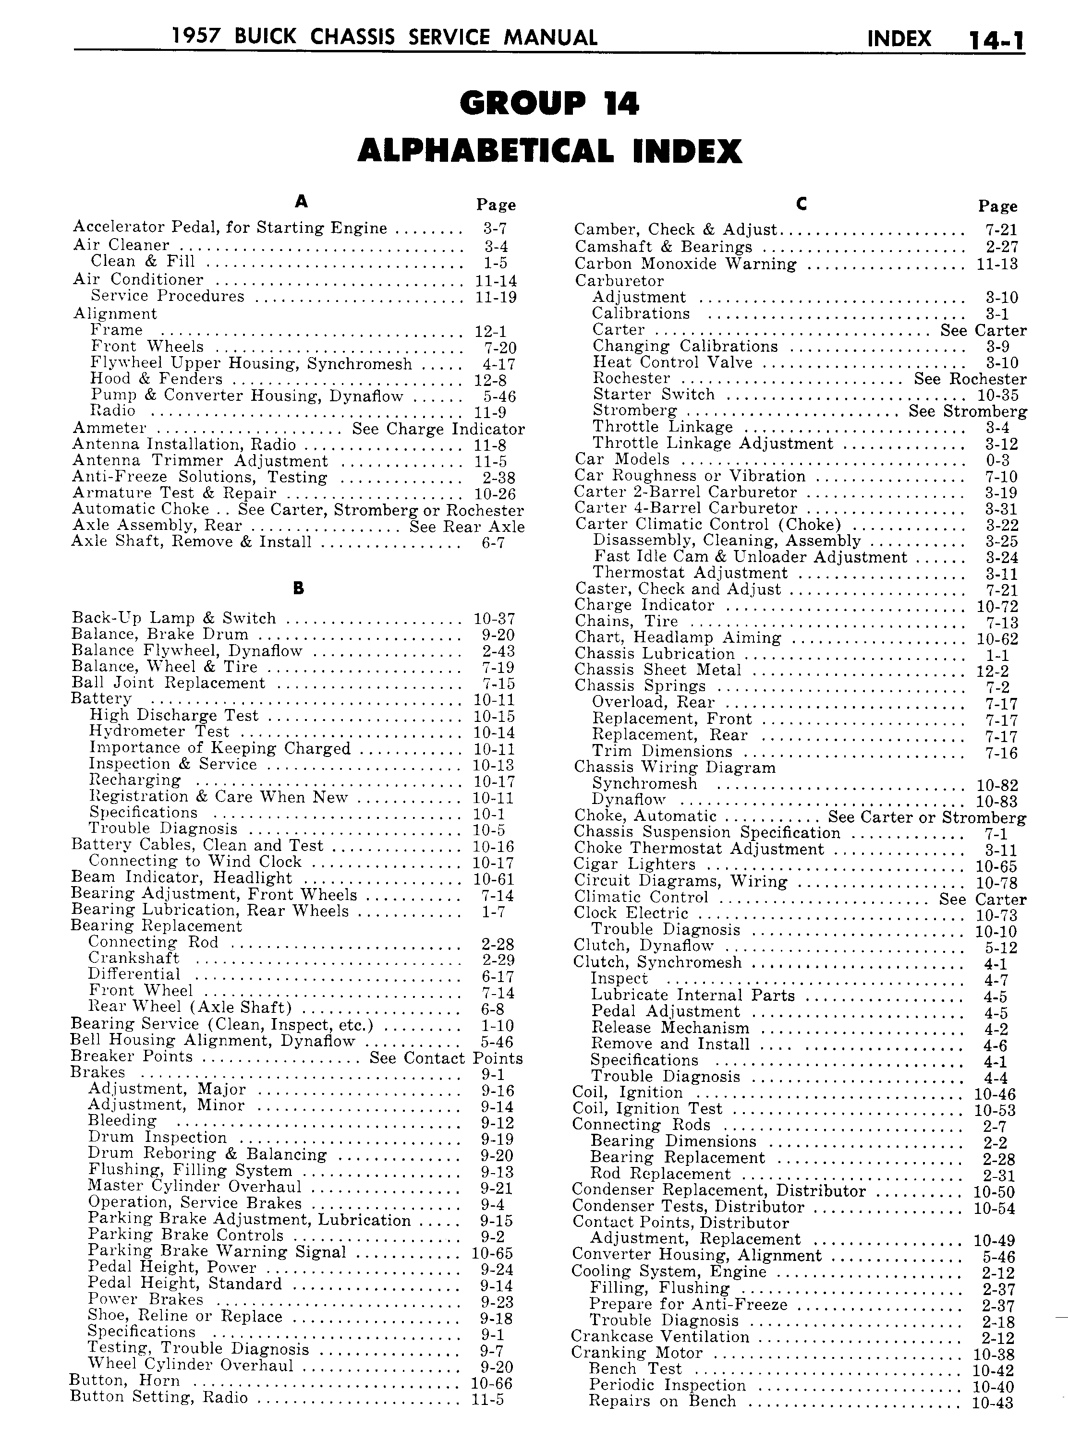 n_14 1957 Buick Shop Manual - Index-001-001.jpg